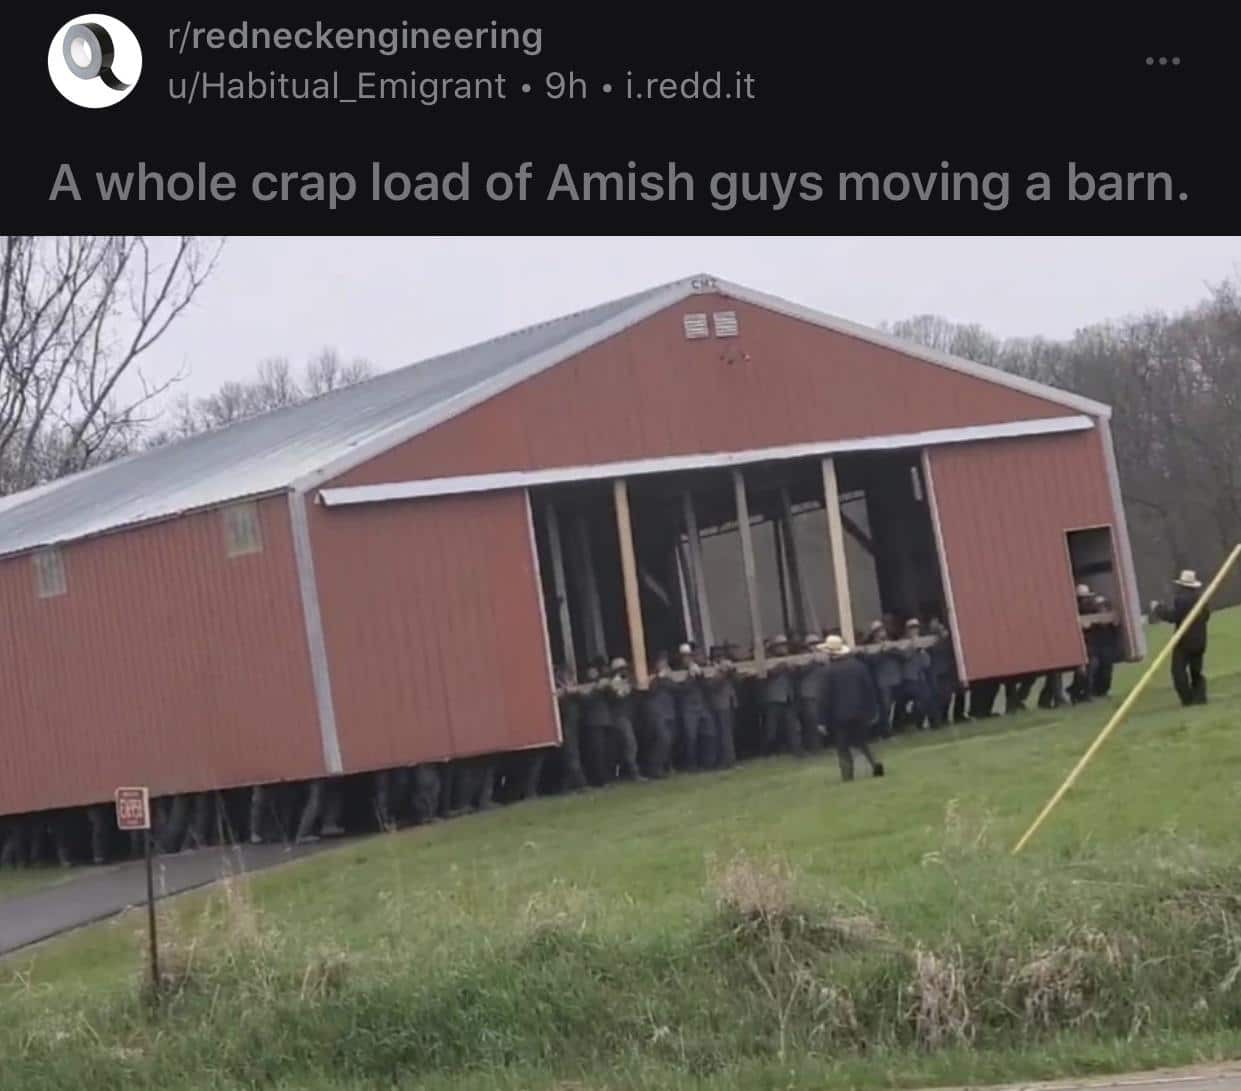 Cringe, Family Guy cringe memes Cringe, Family Guy text: r/redneckengineering u/Habitual Emigrant • 9h • i.redd.it A whole crap load of Amish guys moving a barn. 